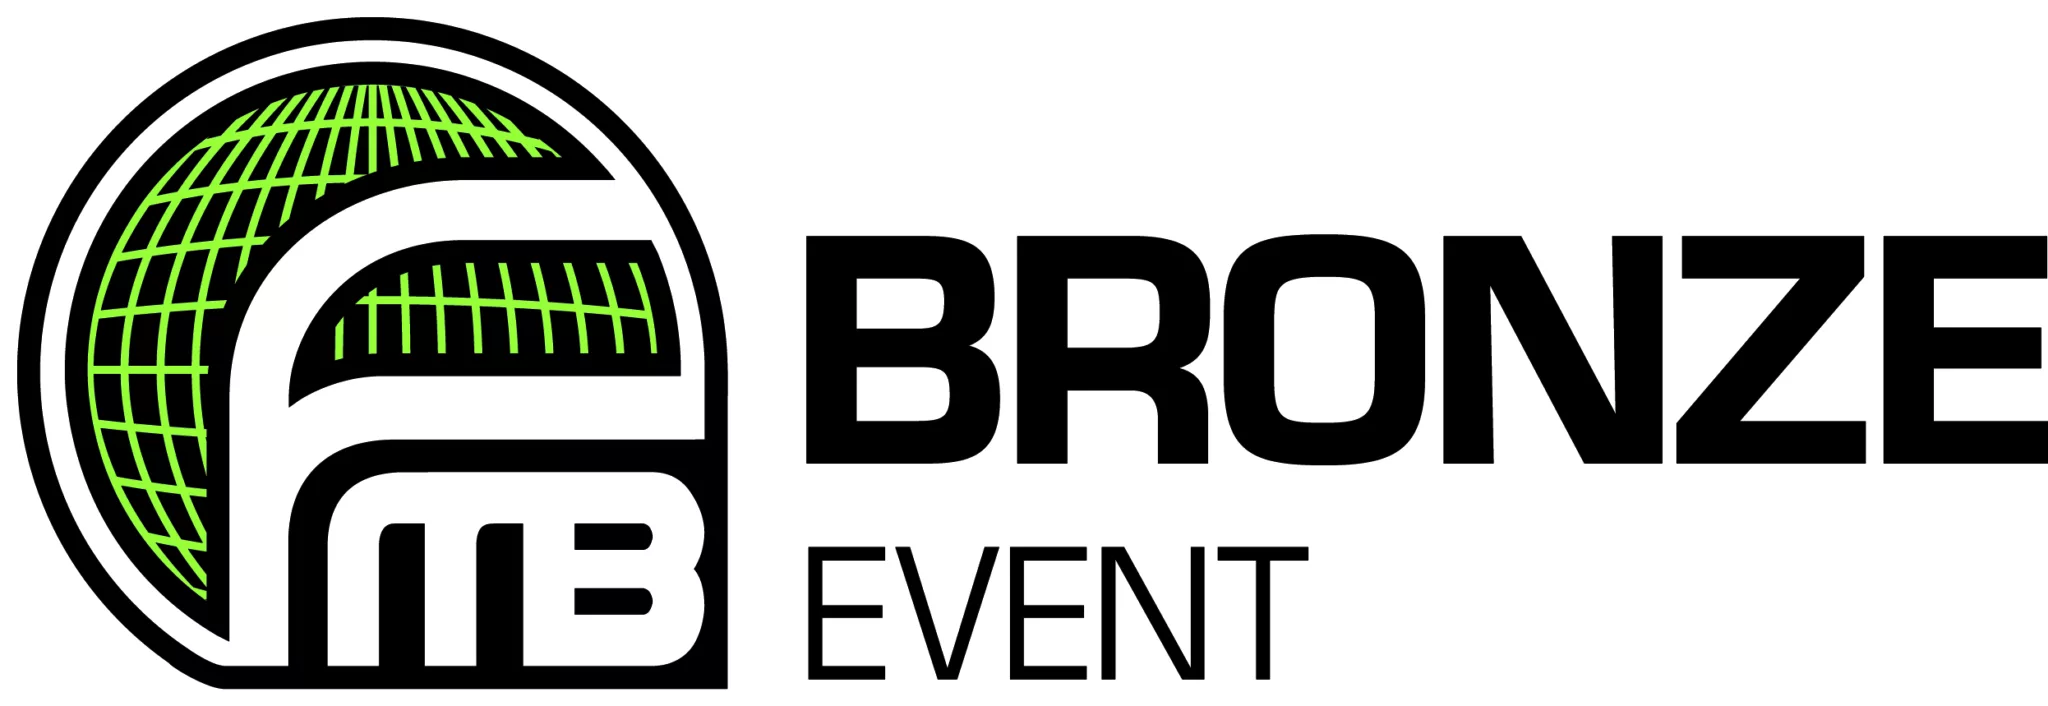 FMB Bronze event